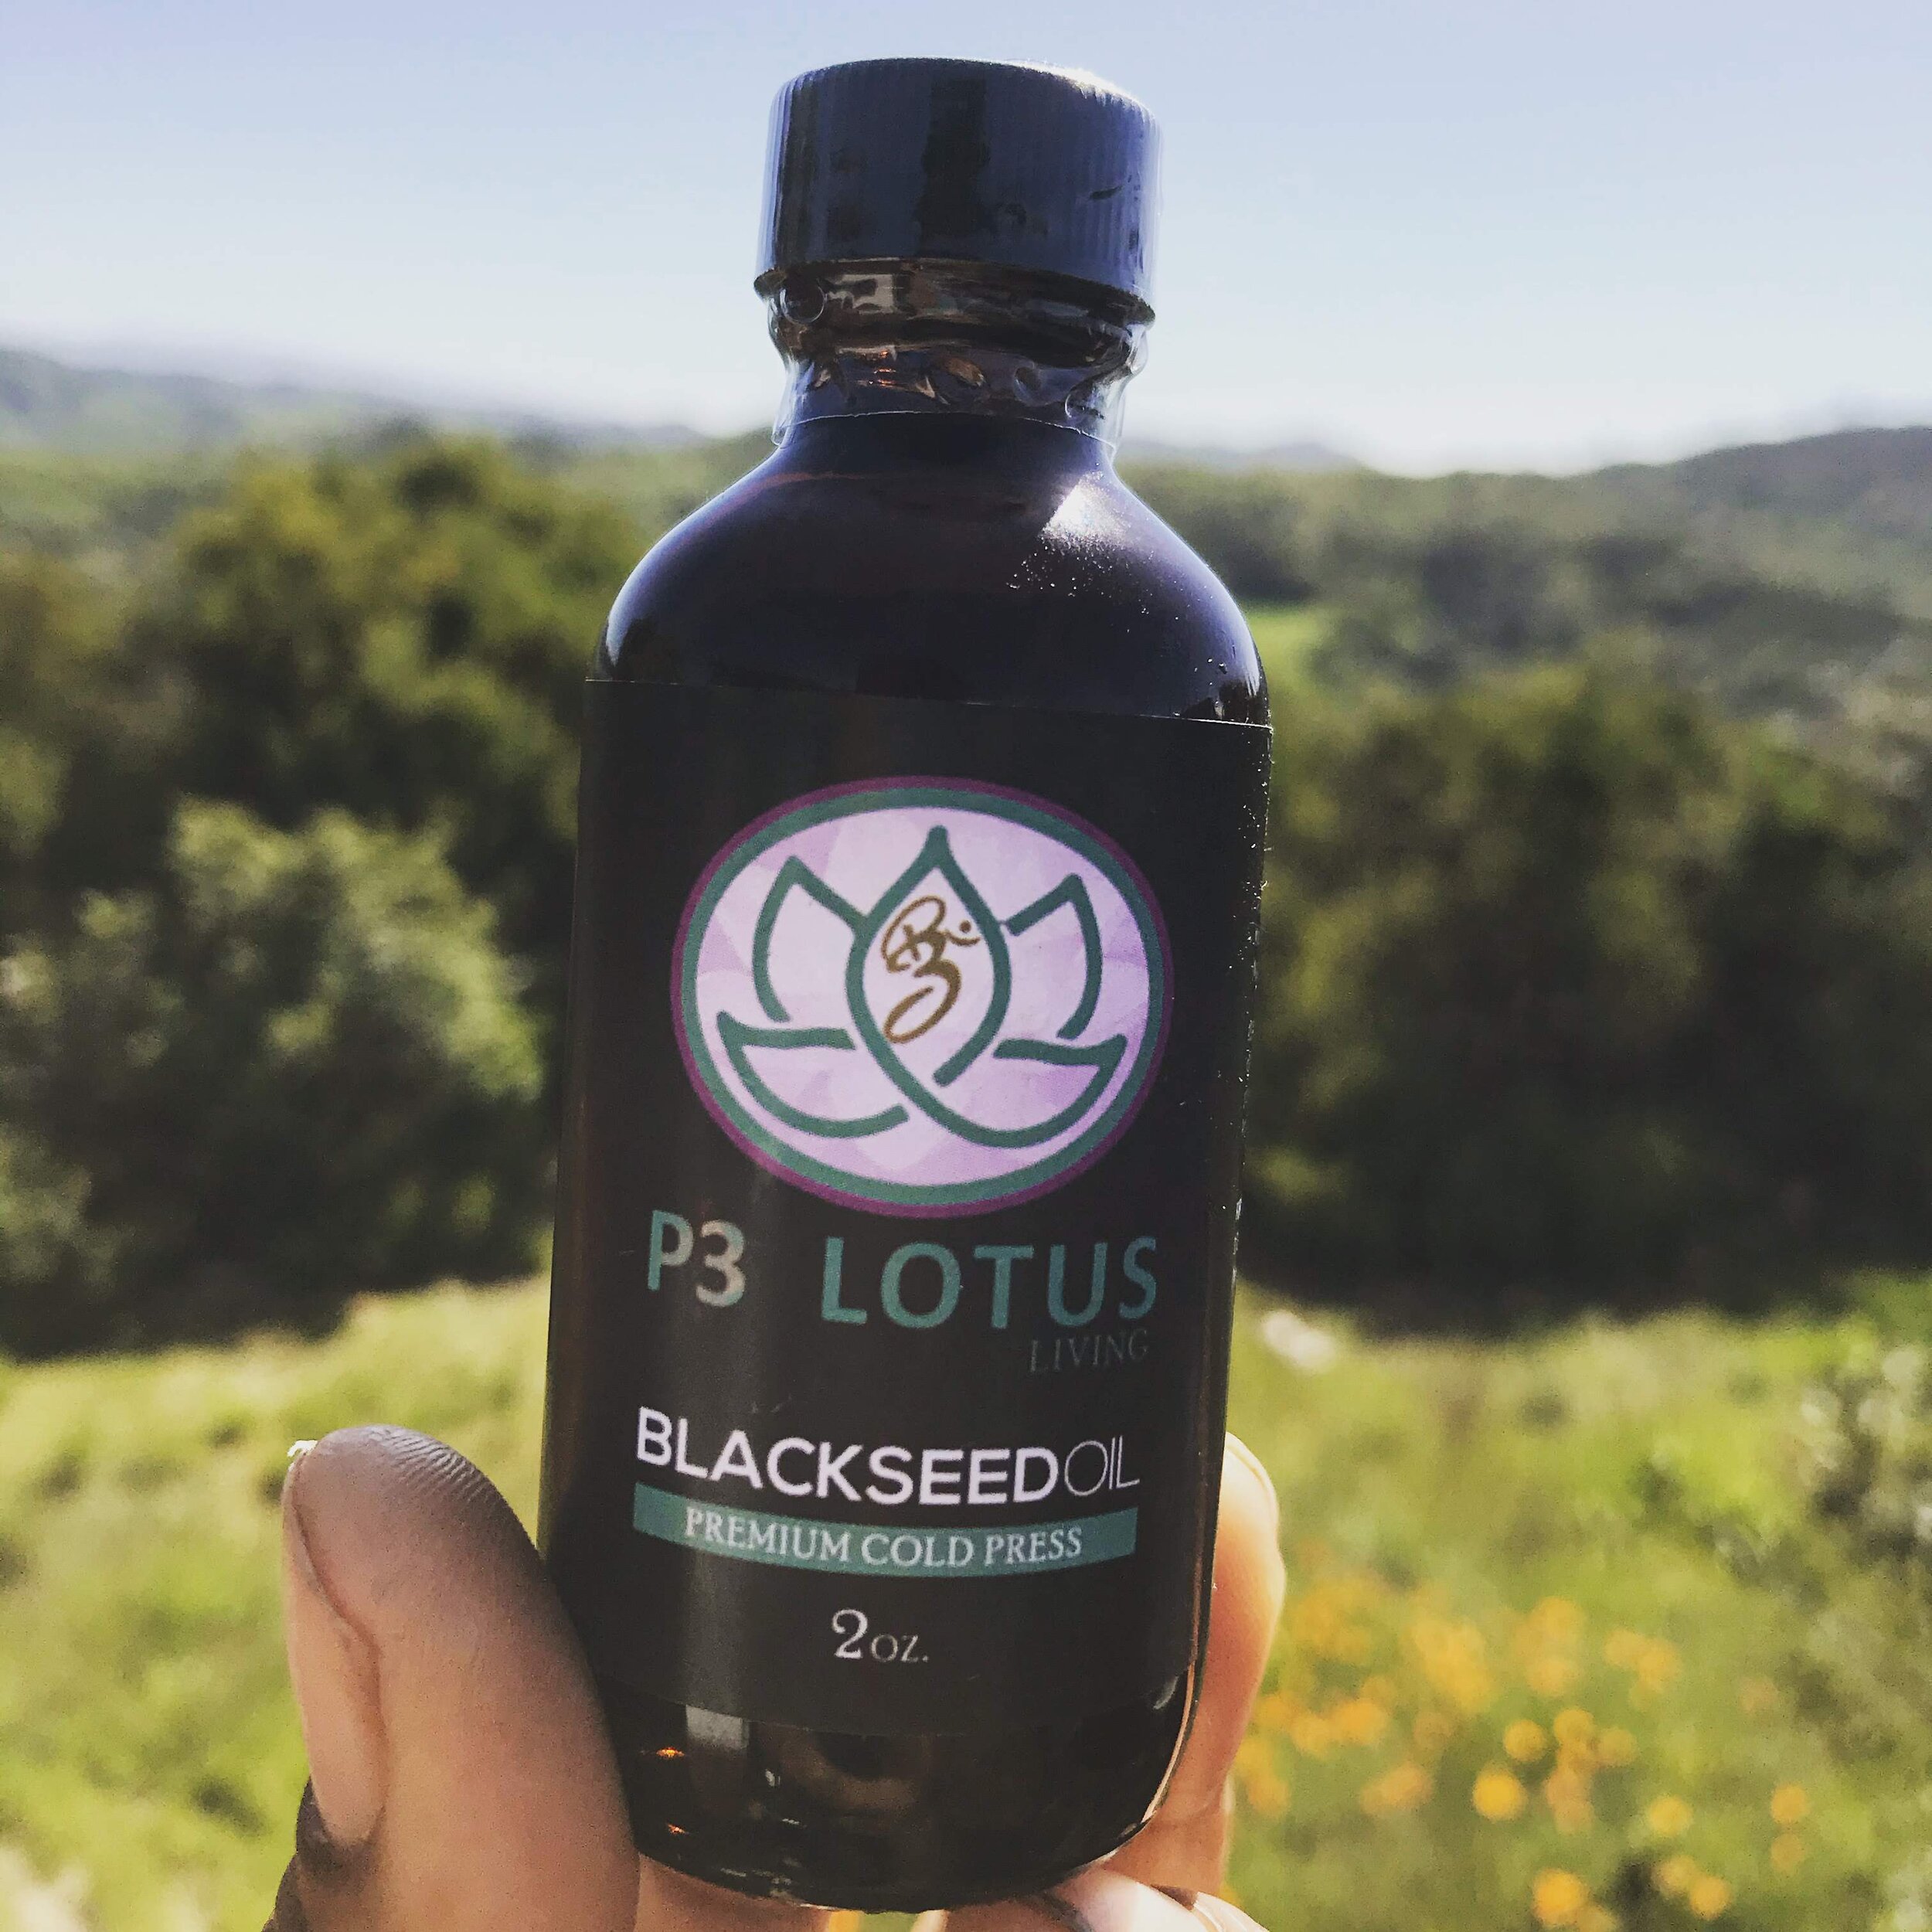 P3 Lotus Living Cold Pressed Black Seed Oil